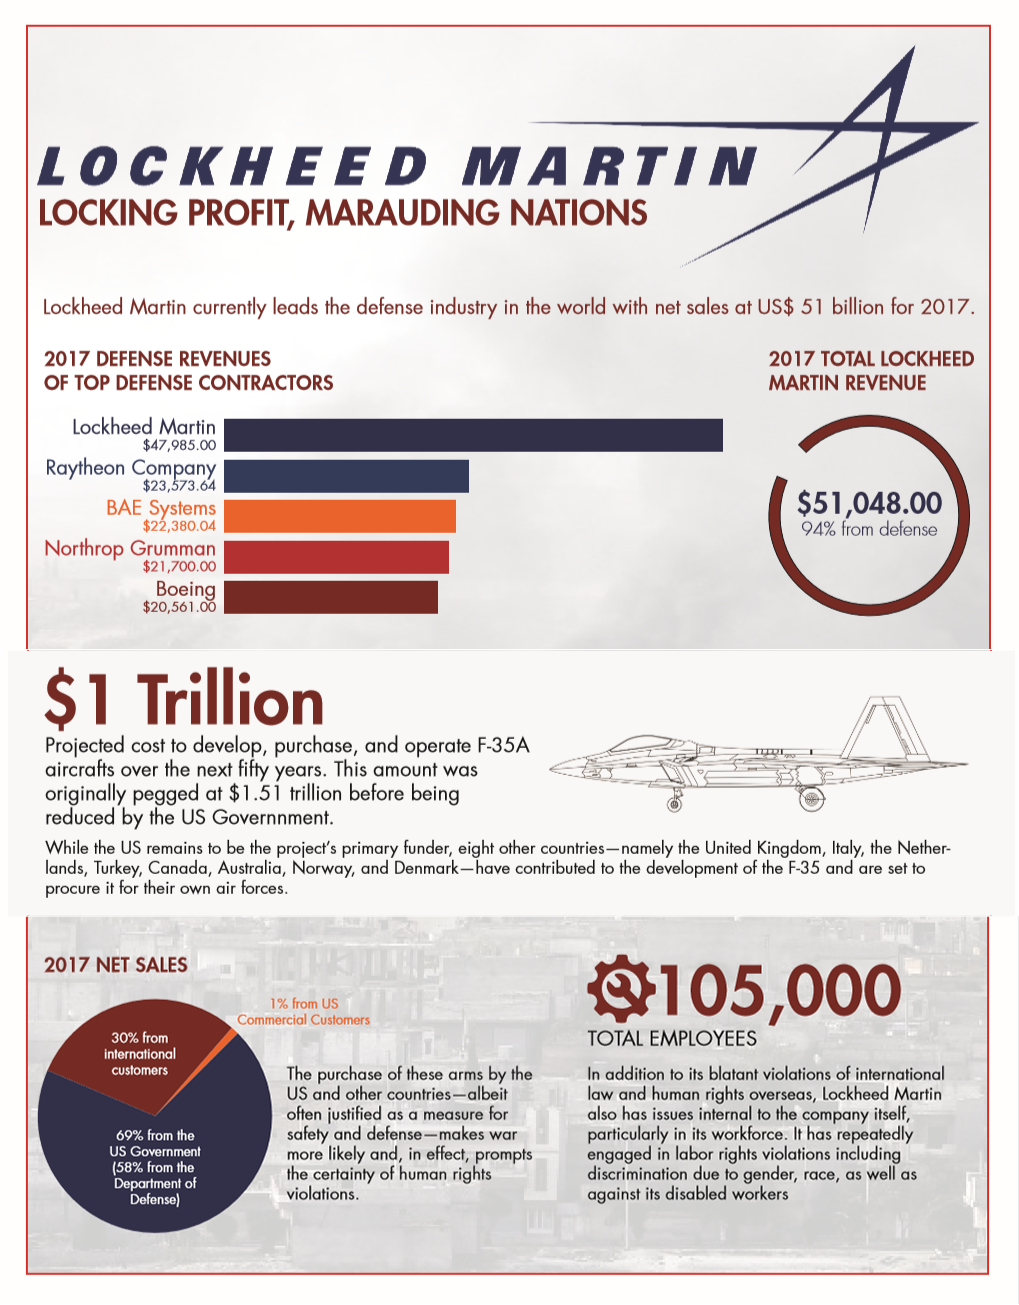 Lockheed Martin: Locking Profit, Marauding Nations